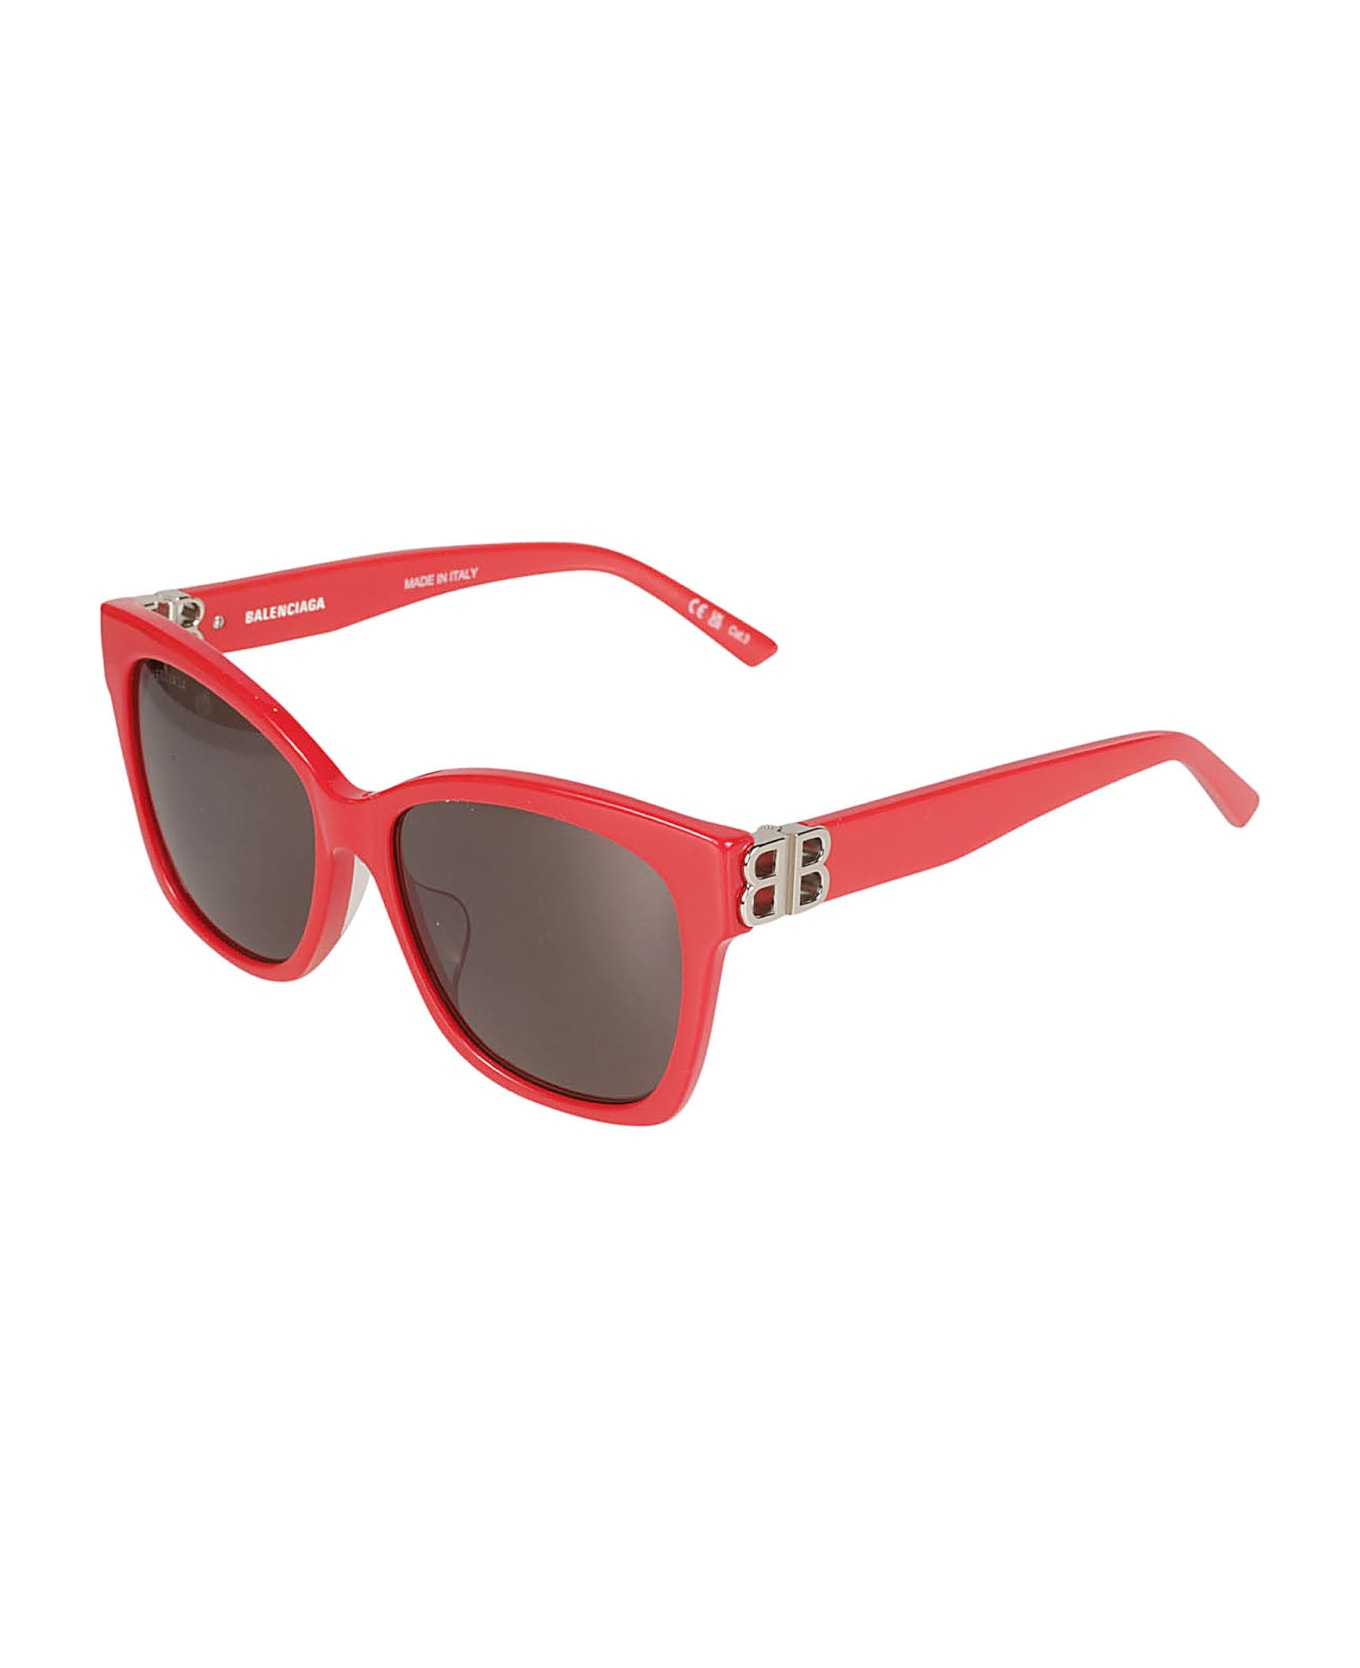 Balenciaga Eyewear Round Frame Bb Hinge Sunglasses - Red/Silver/Grey